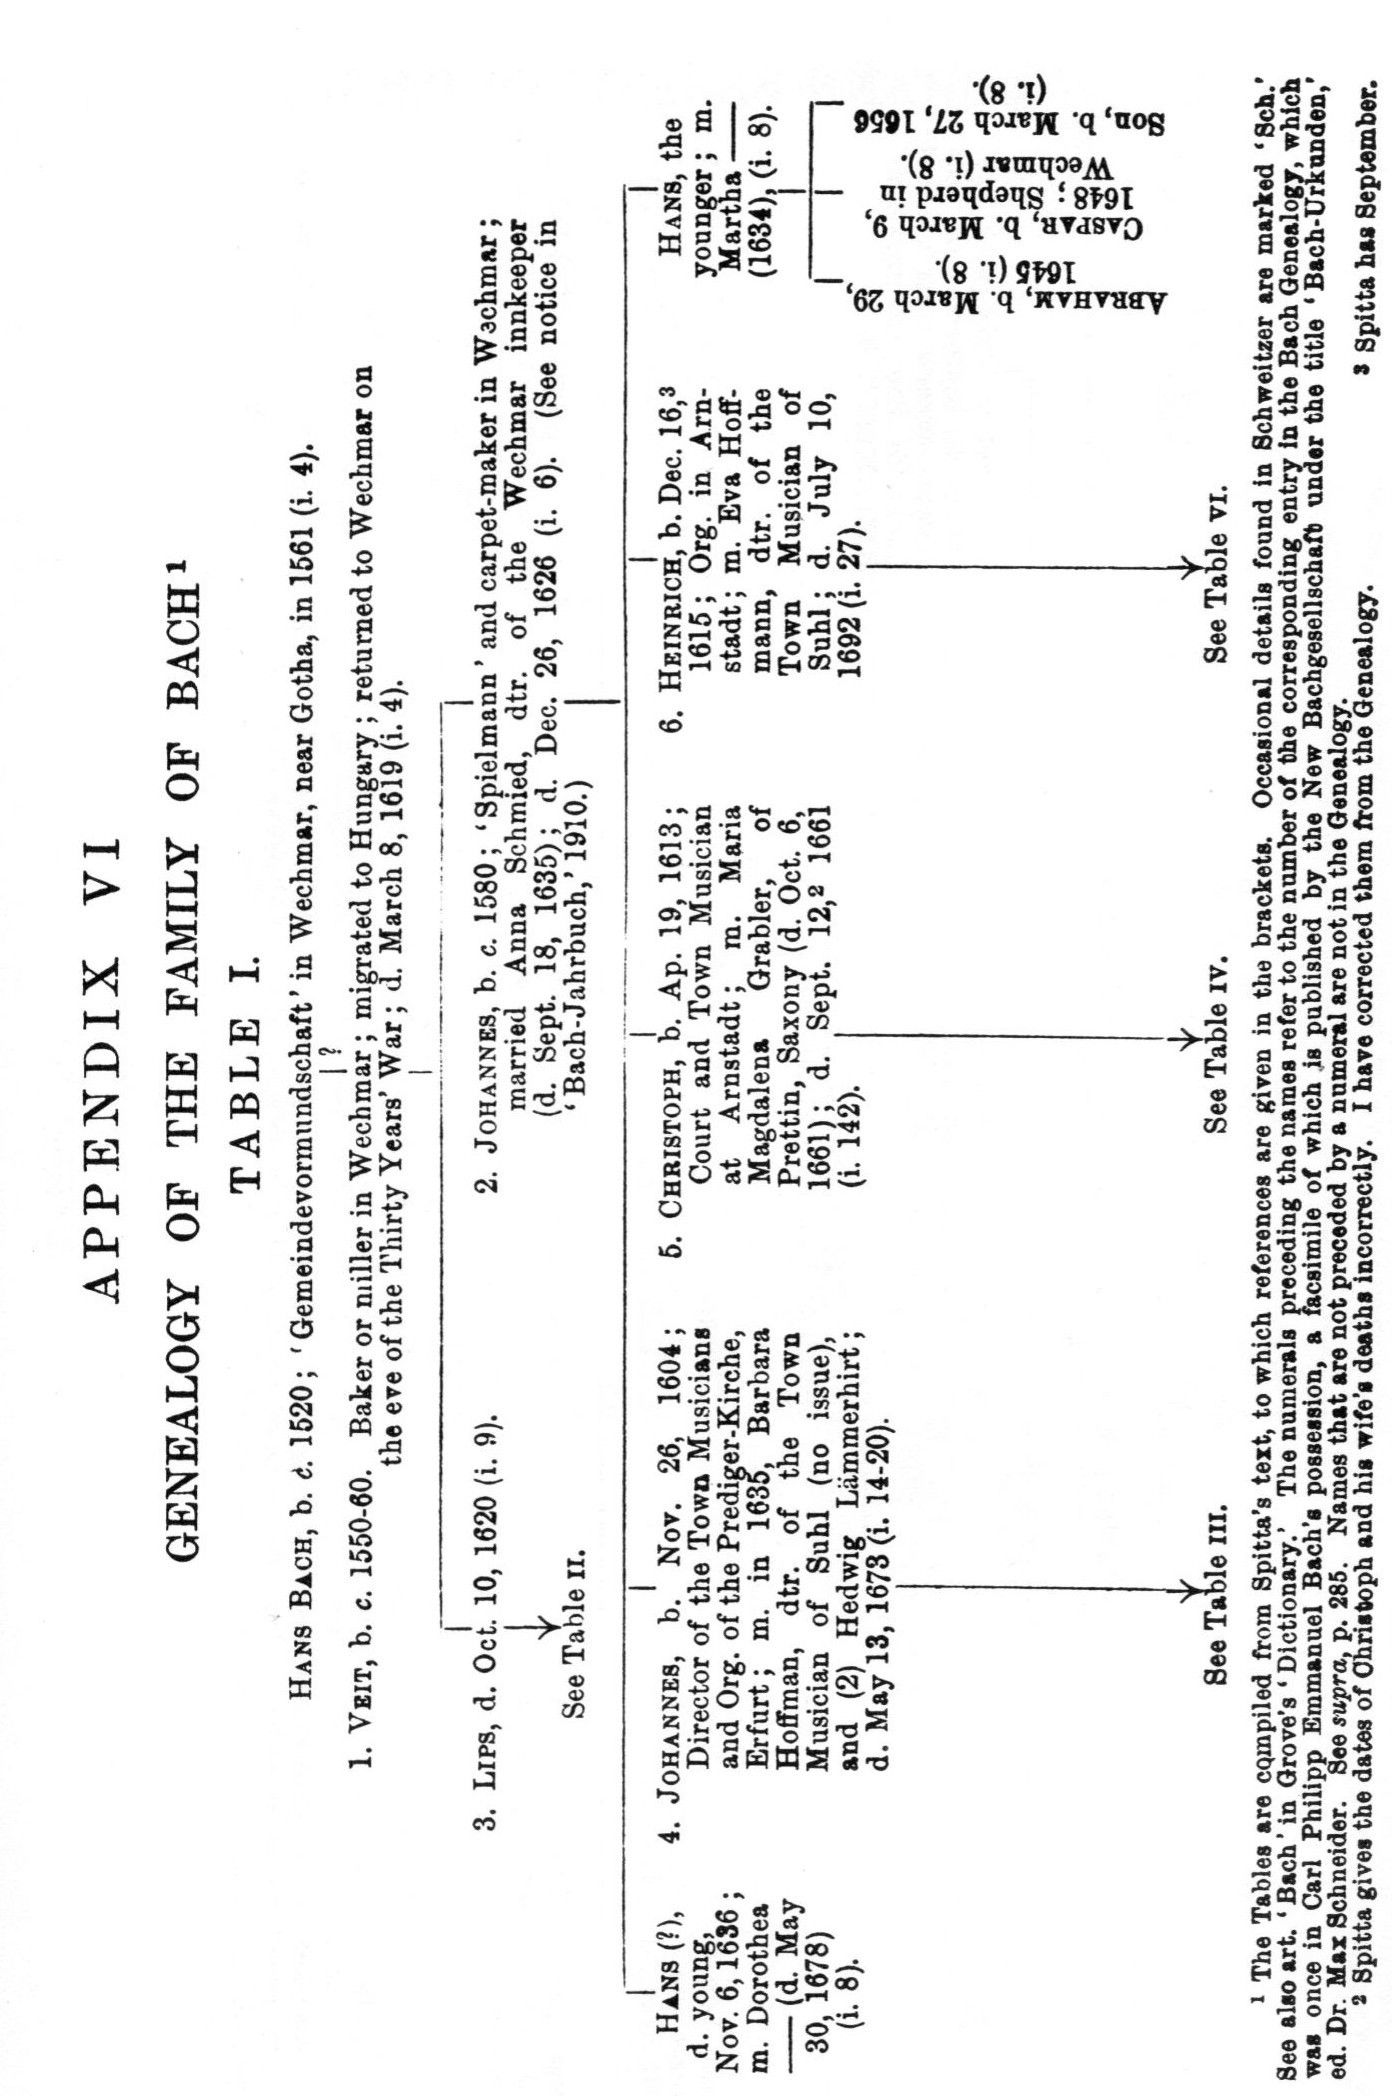 Genealogy Table, p. 303